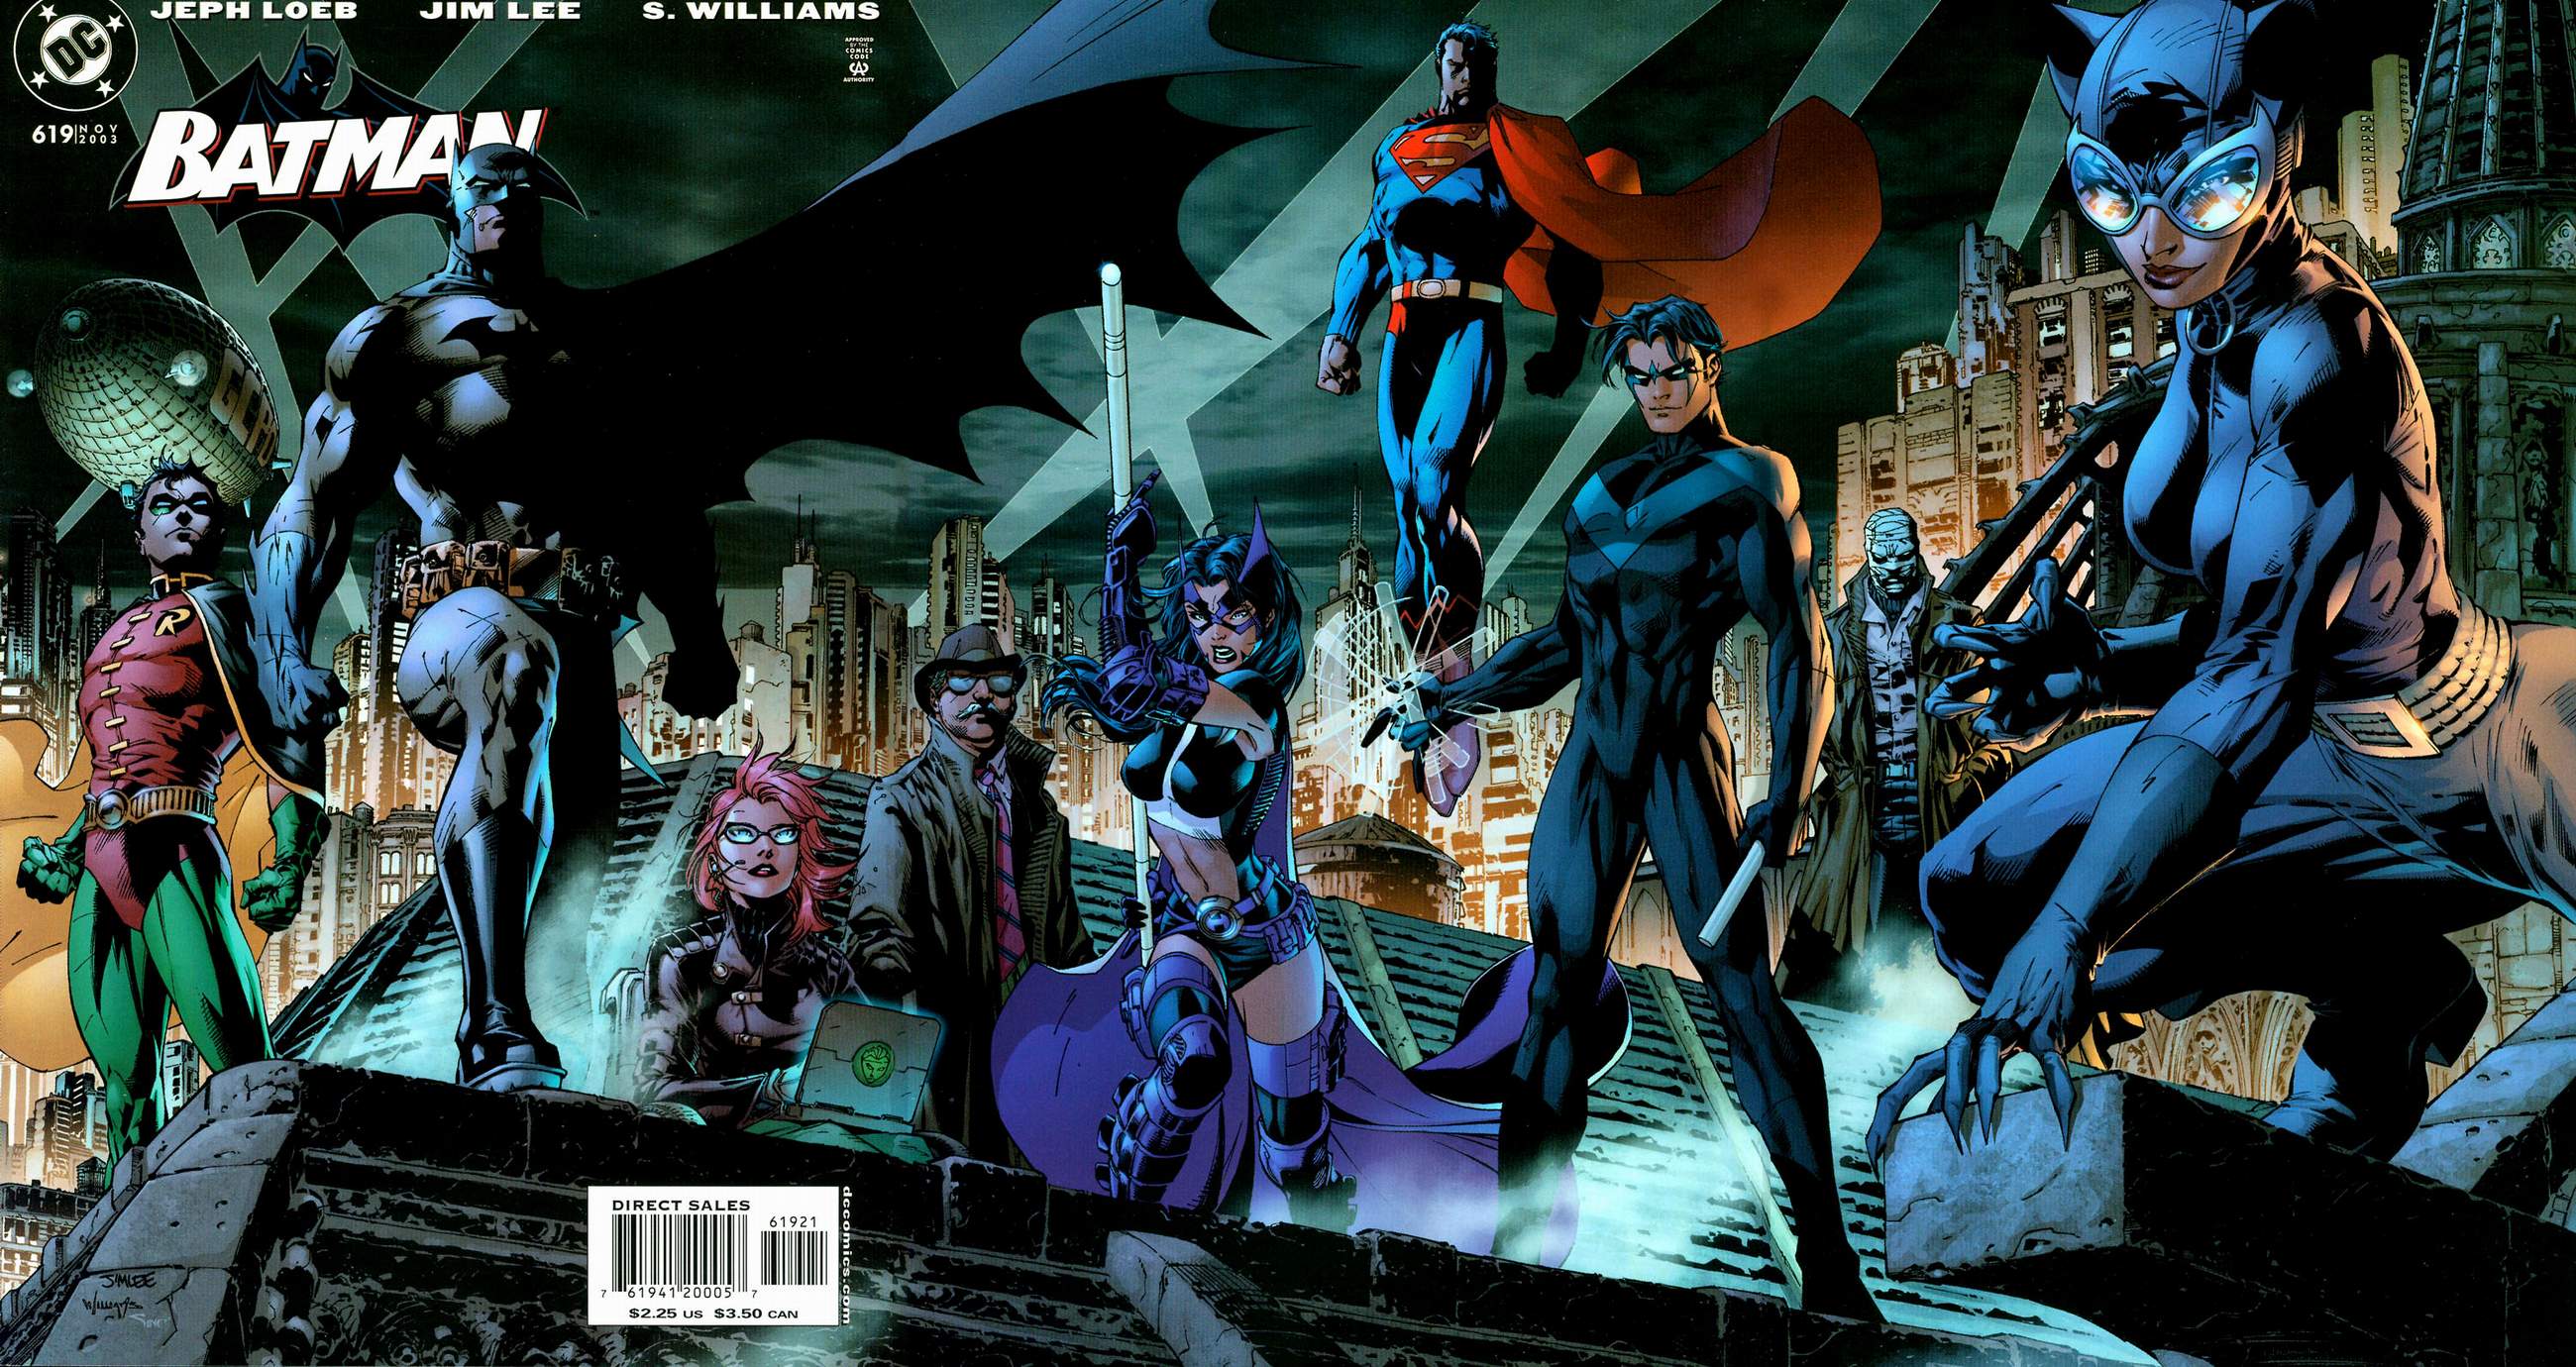 Batman Hush Issue 12 | Read Batman Hush Issue 12 comic online in high  quality. Read Full Comic online for free - Read comics online in high  quality .| READ COMIC ONLINE